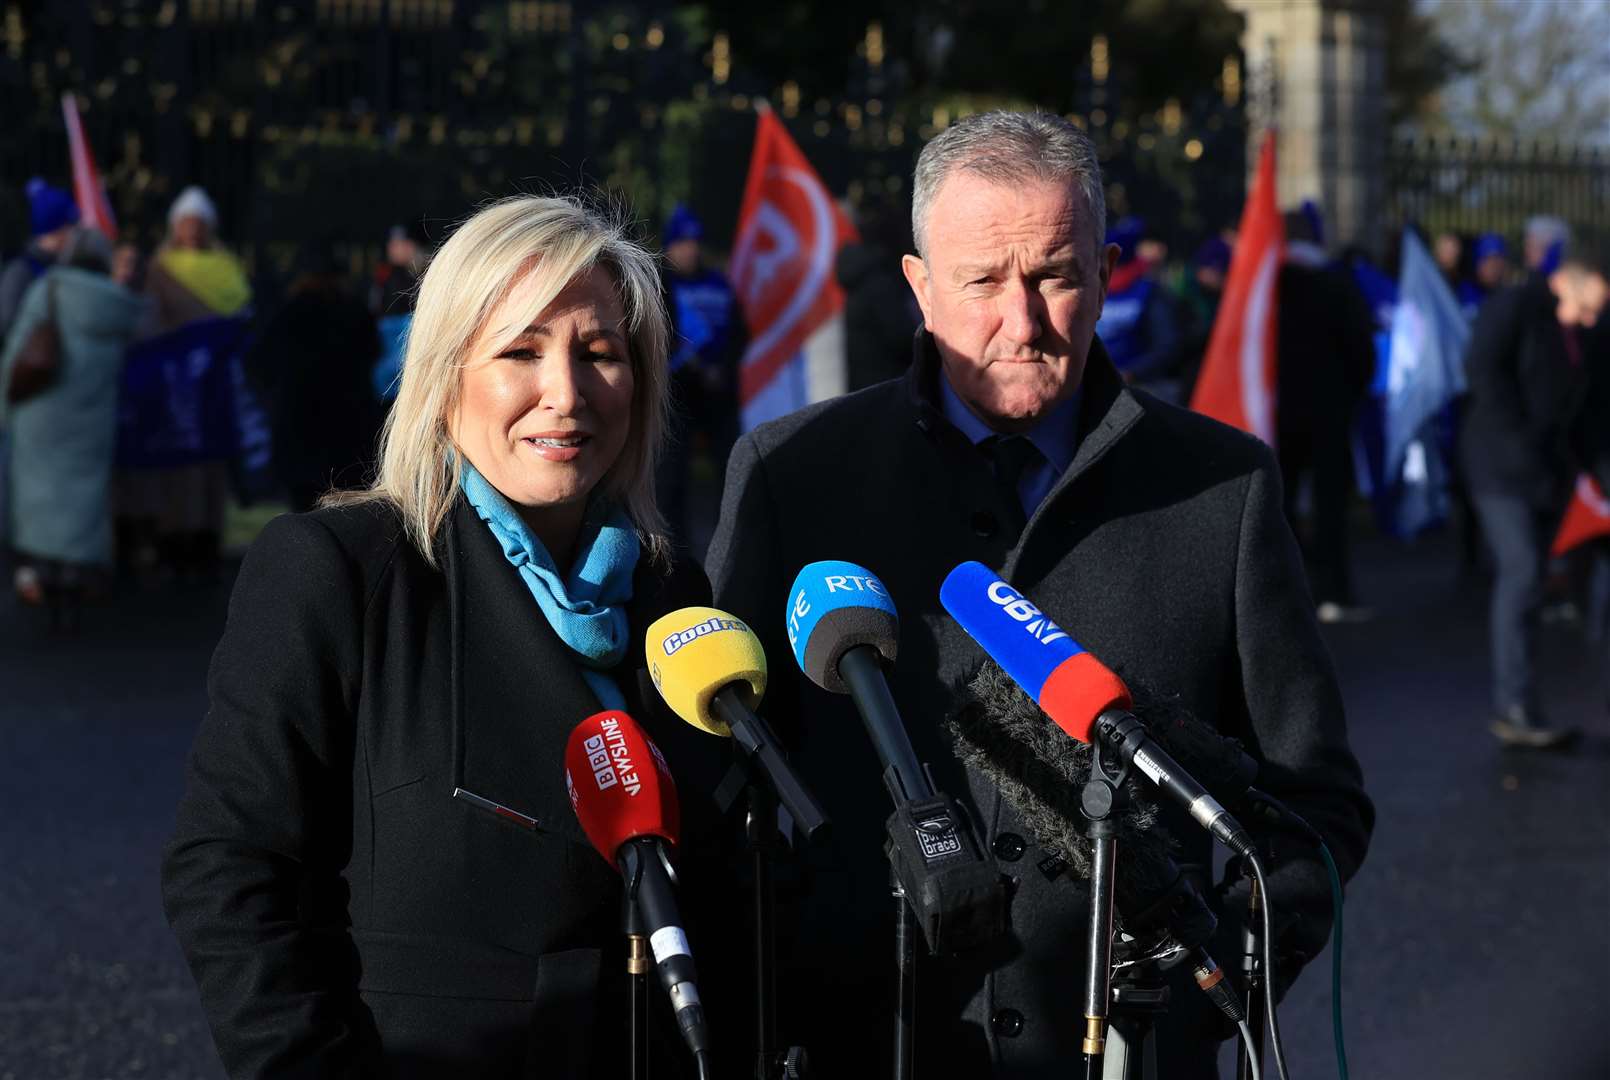 Sinn Fein representatives Michelle O’Neill and Conor Murphy outside Hillsborough Castle (Liam McBurney/PA)